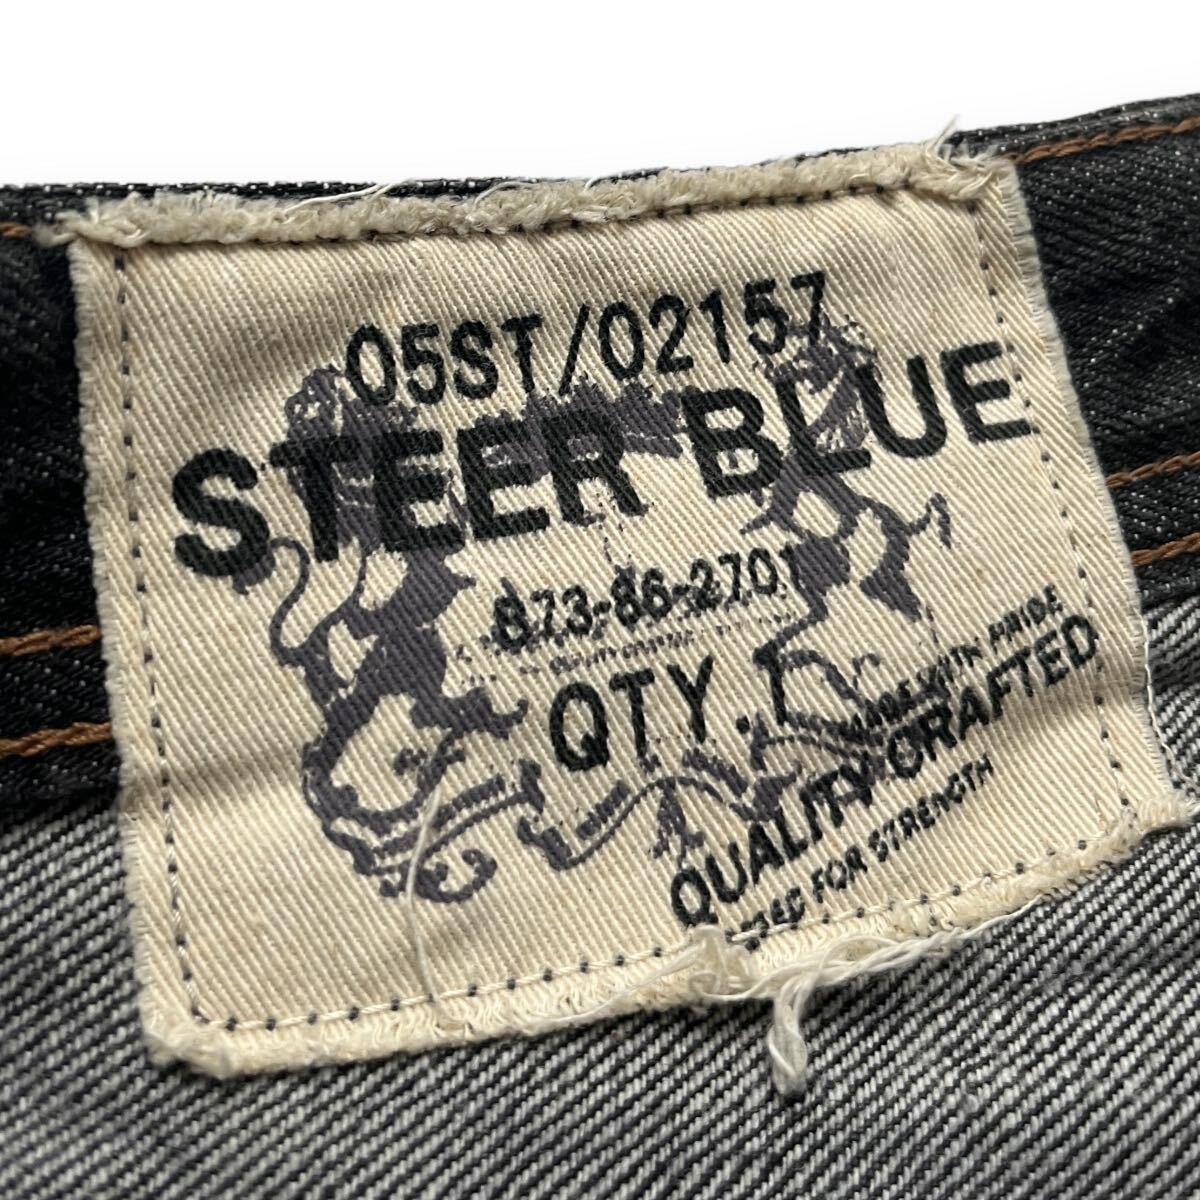 japanese label black cargo pants KMRii sharespirit ifsixwasnine lgb L.G.B 00s